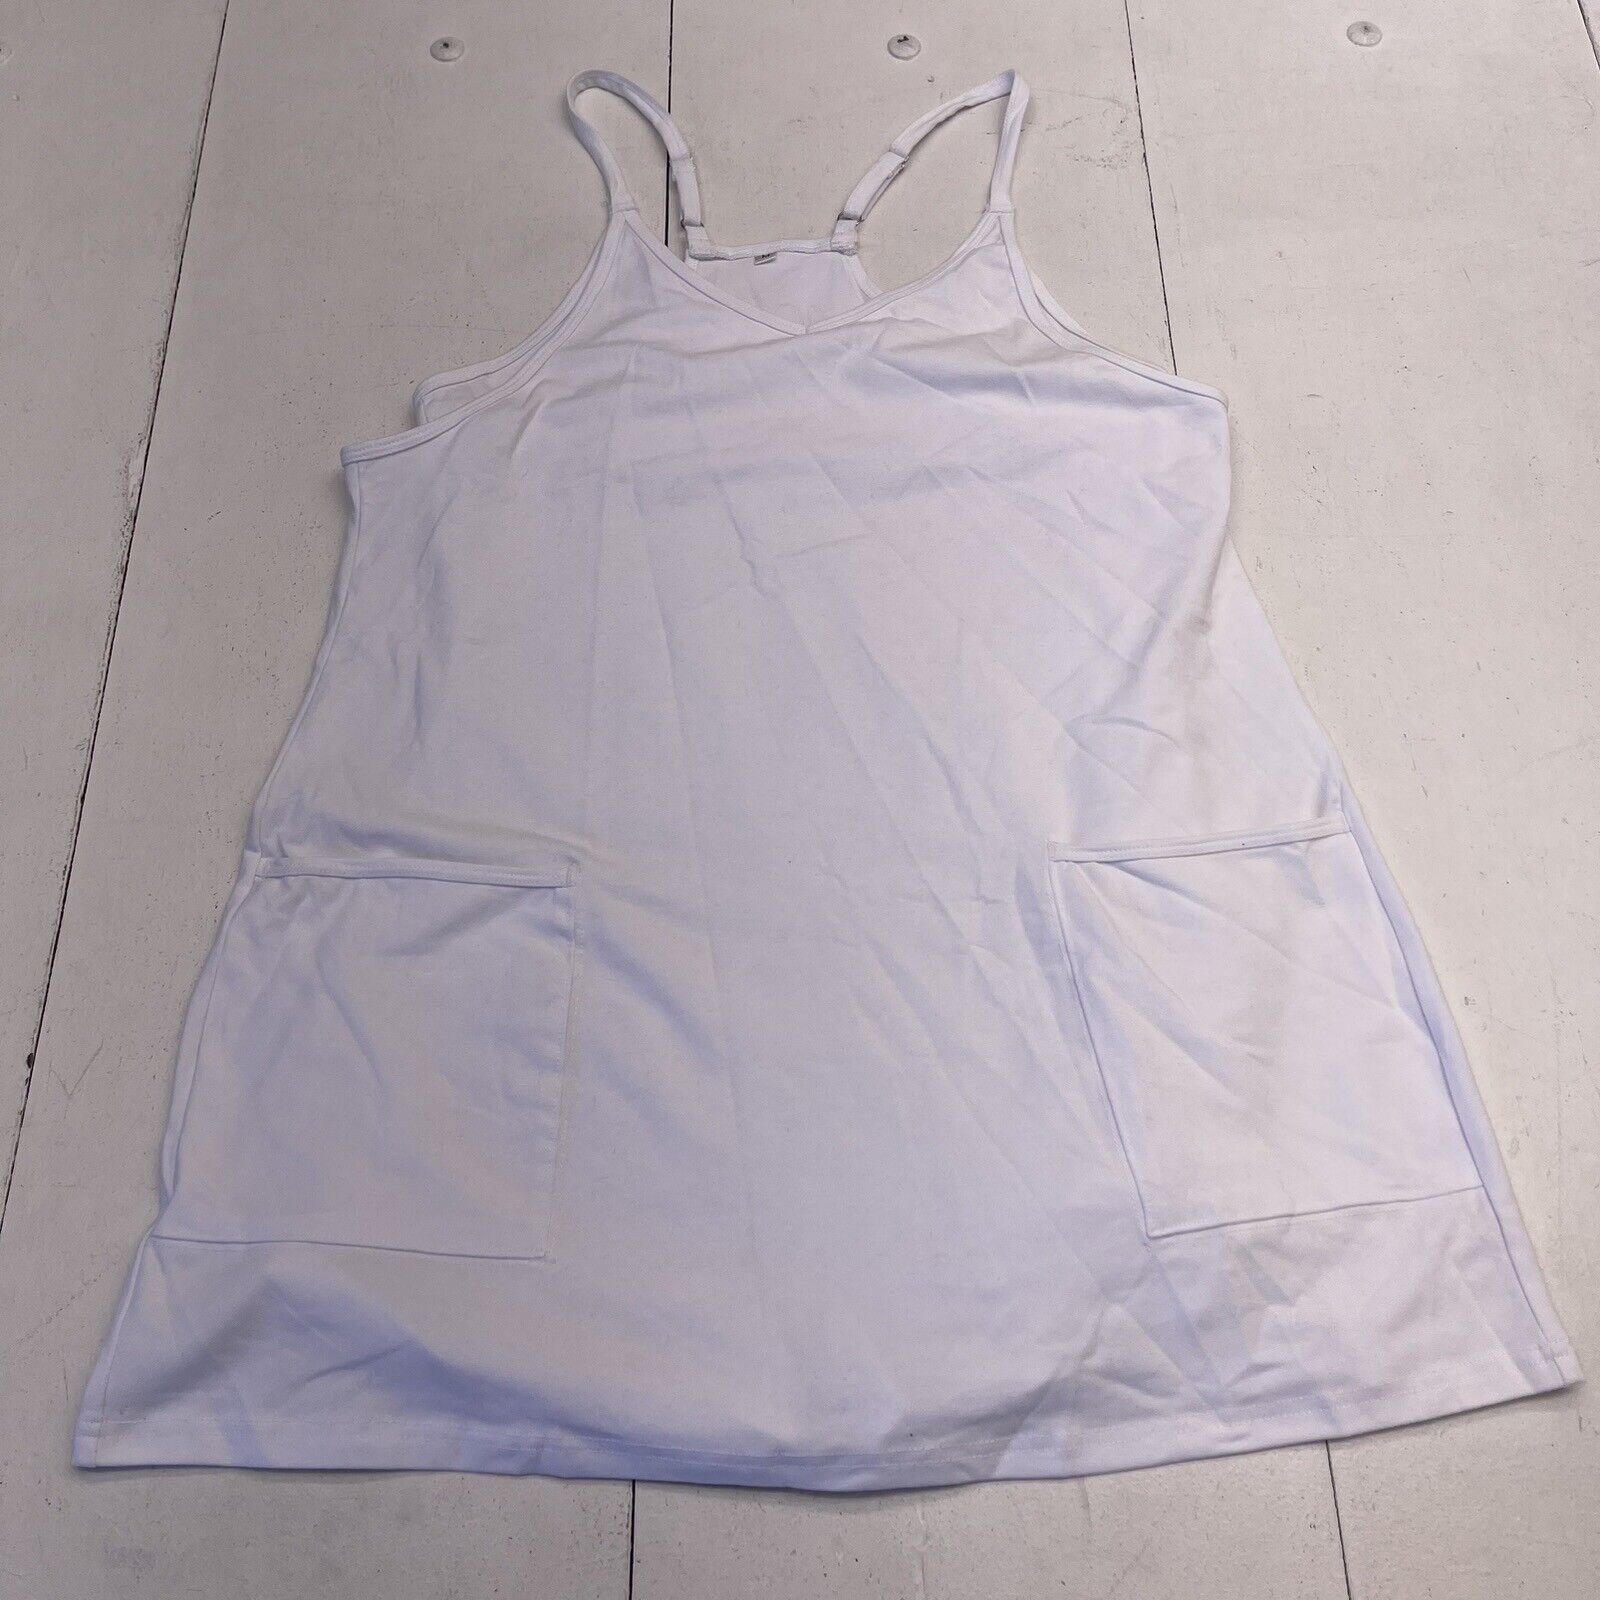 Caracilia White Undershorts Dress Women's Size Medium New - beyond